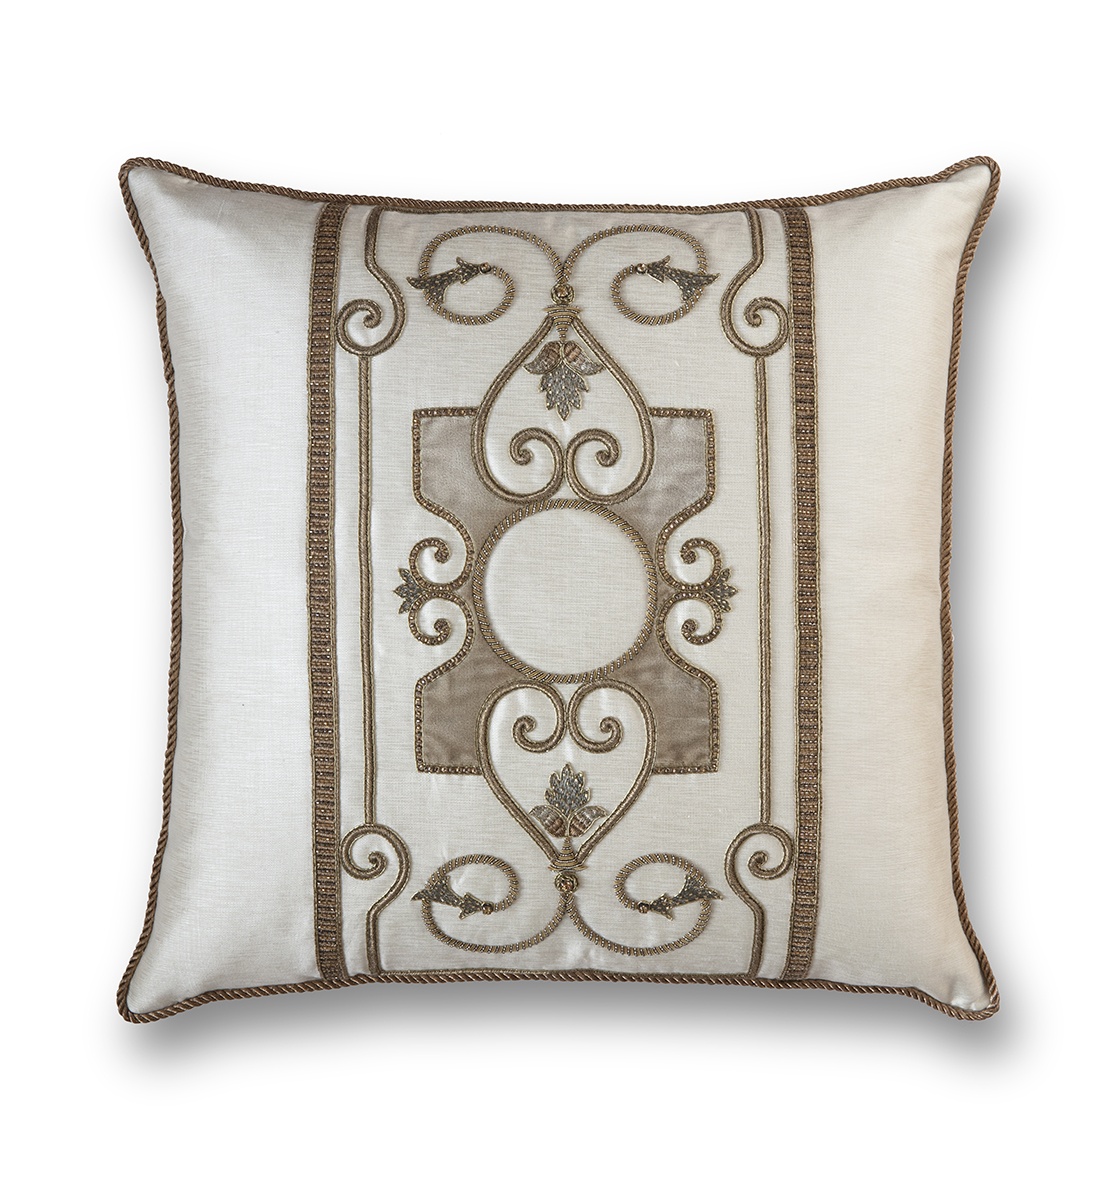 Cordoba cushion in Lagan silk - Oyster